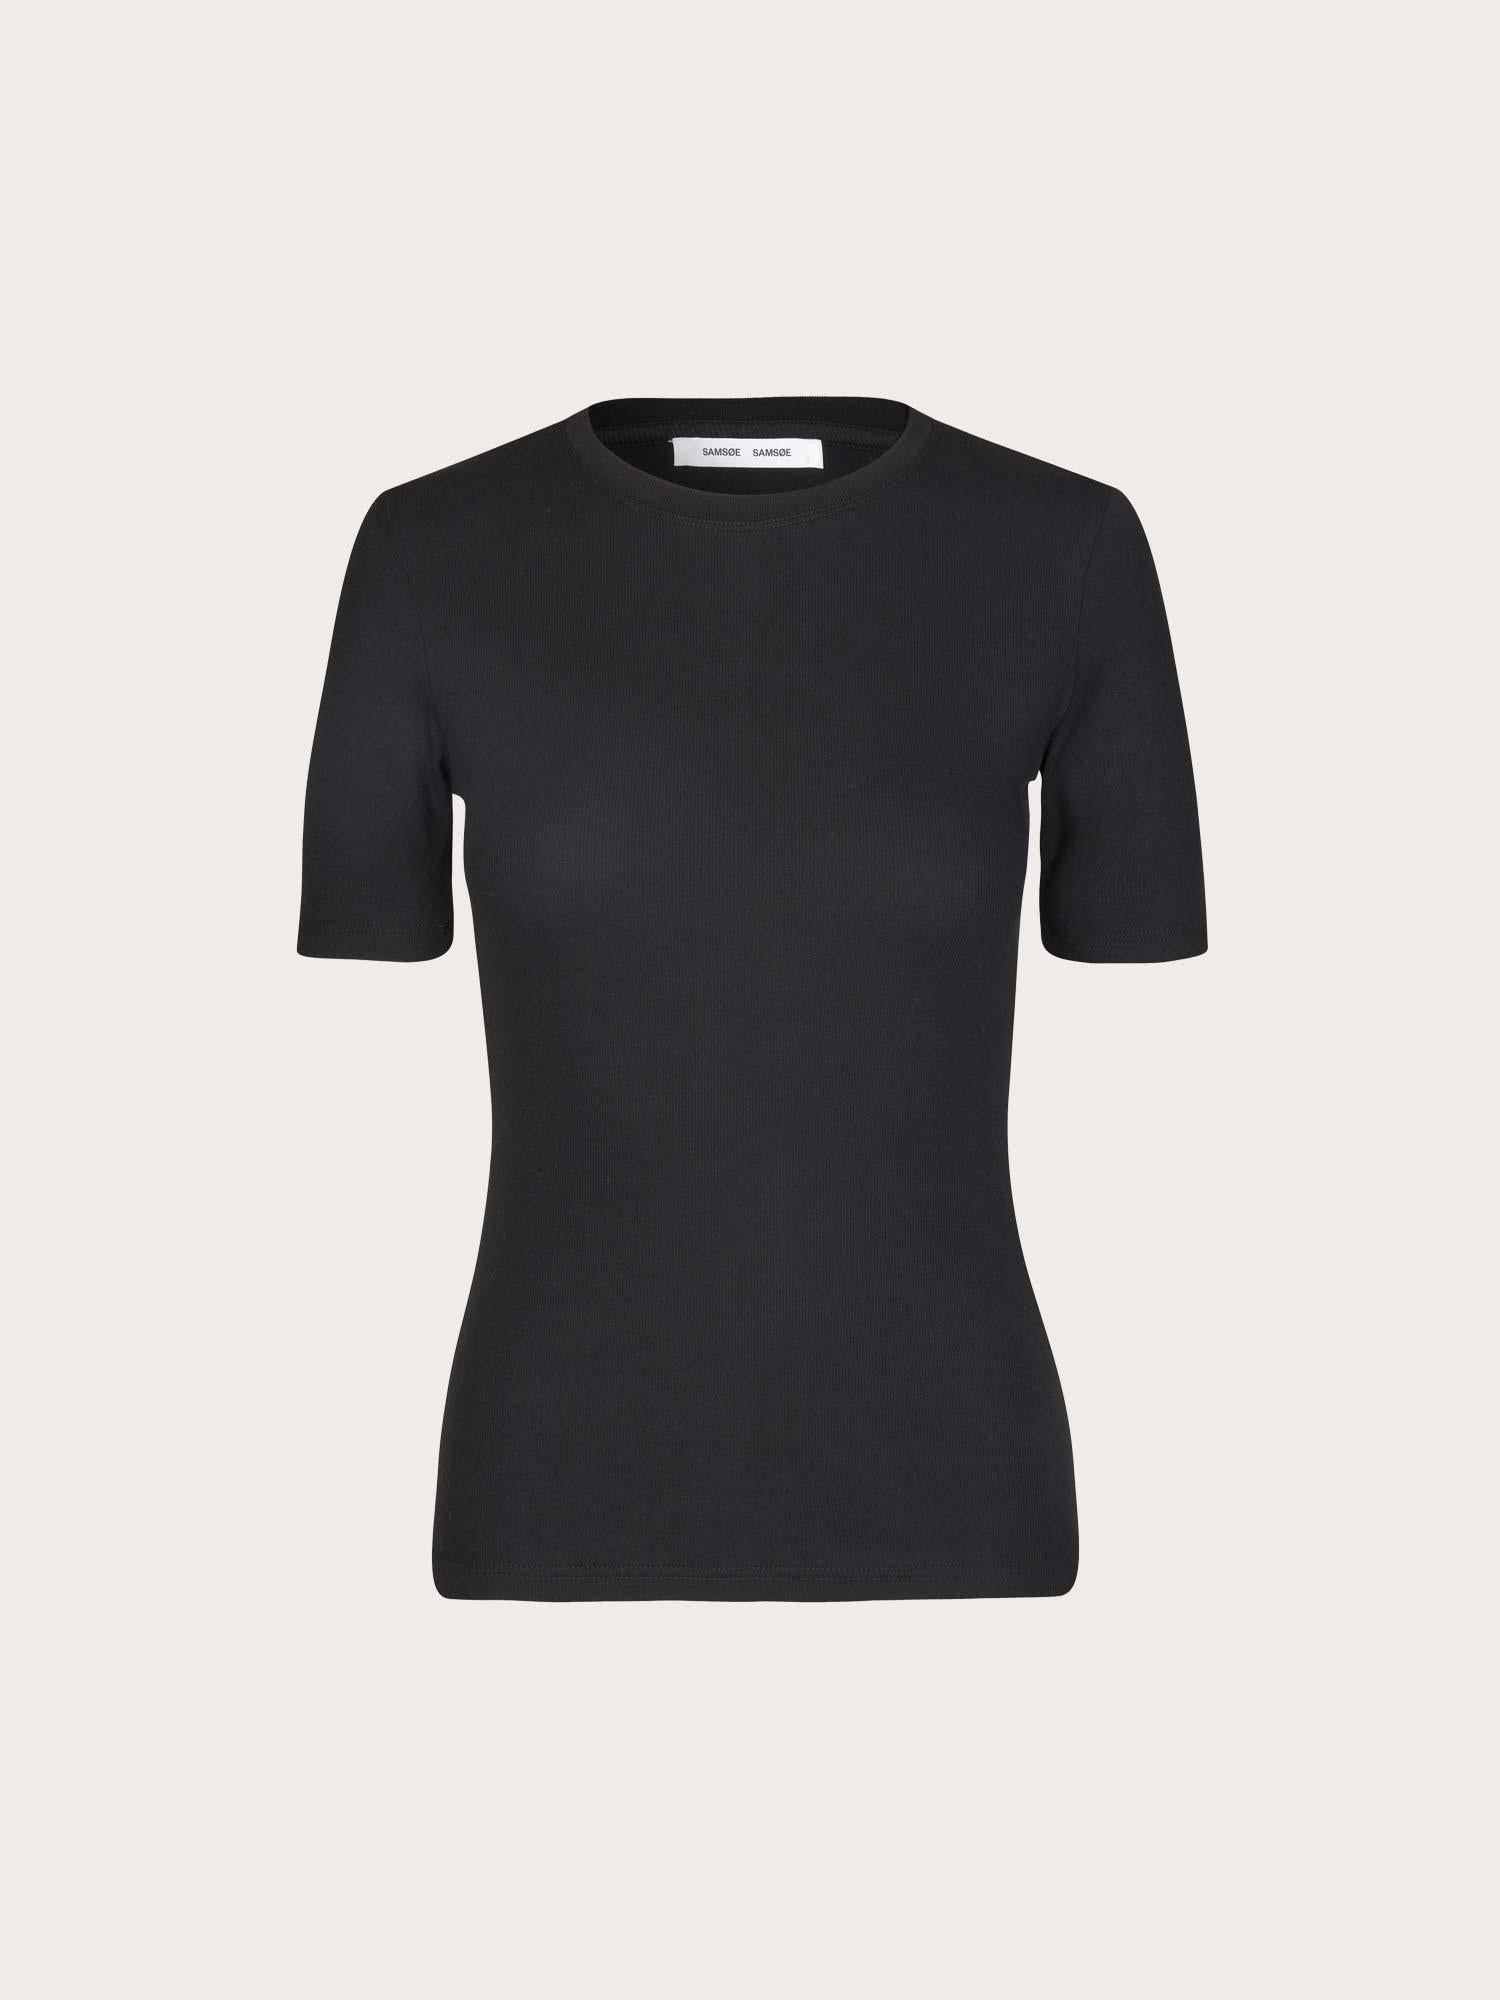 Saalexo T-Shirt - Black